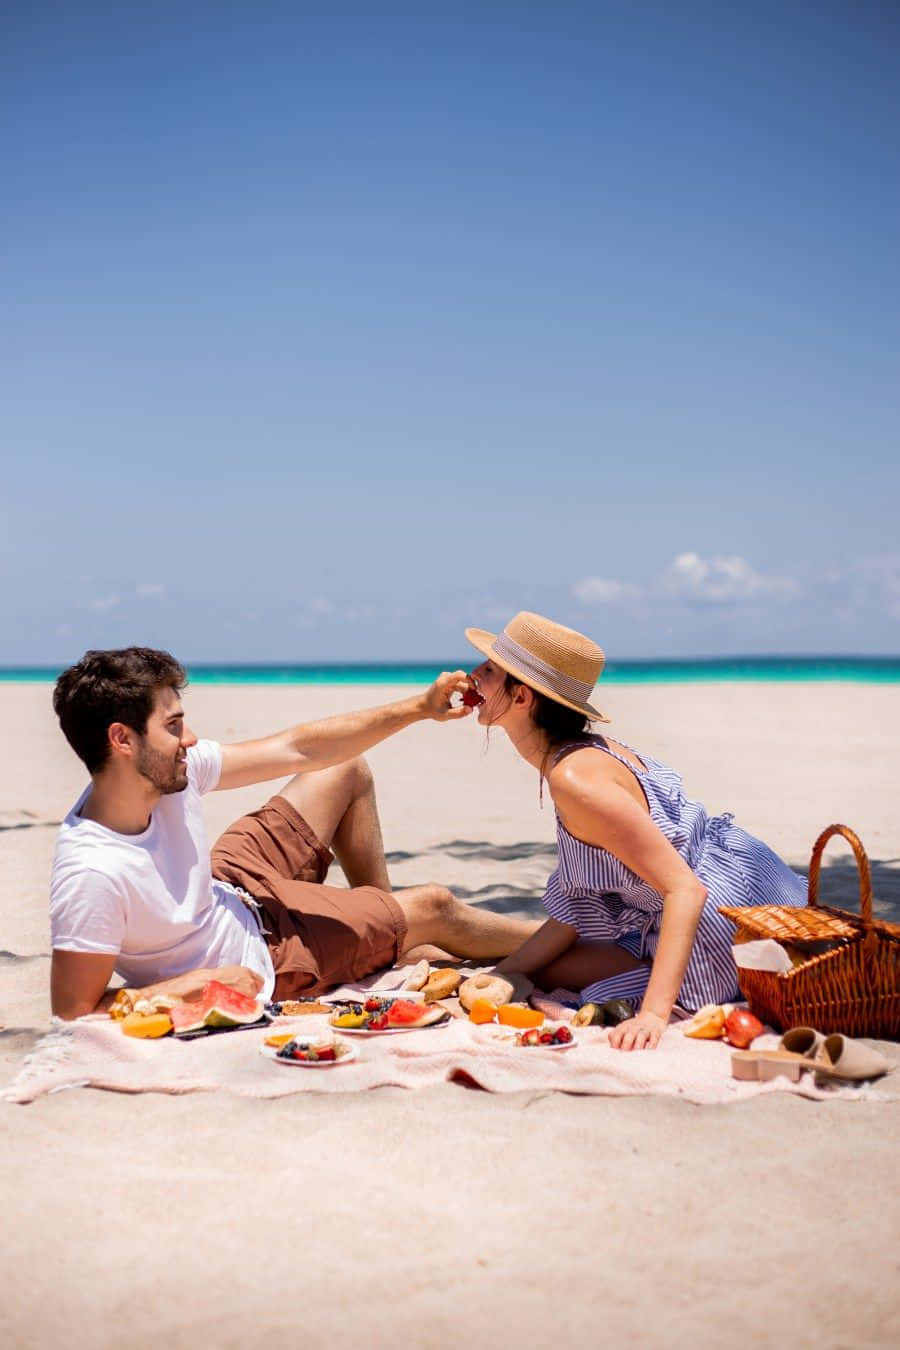 "A delightful beach picnic with an ocean view" Wallpaper